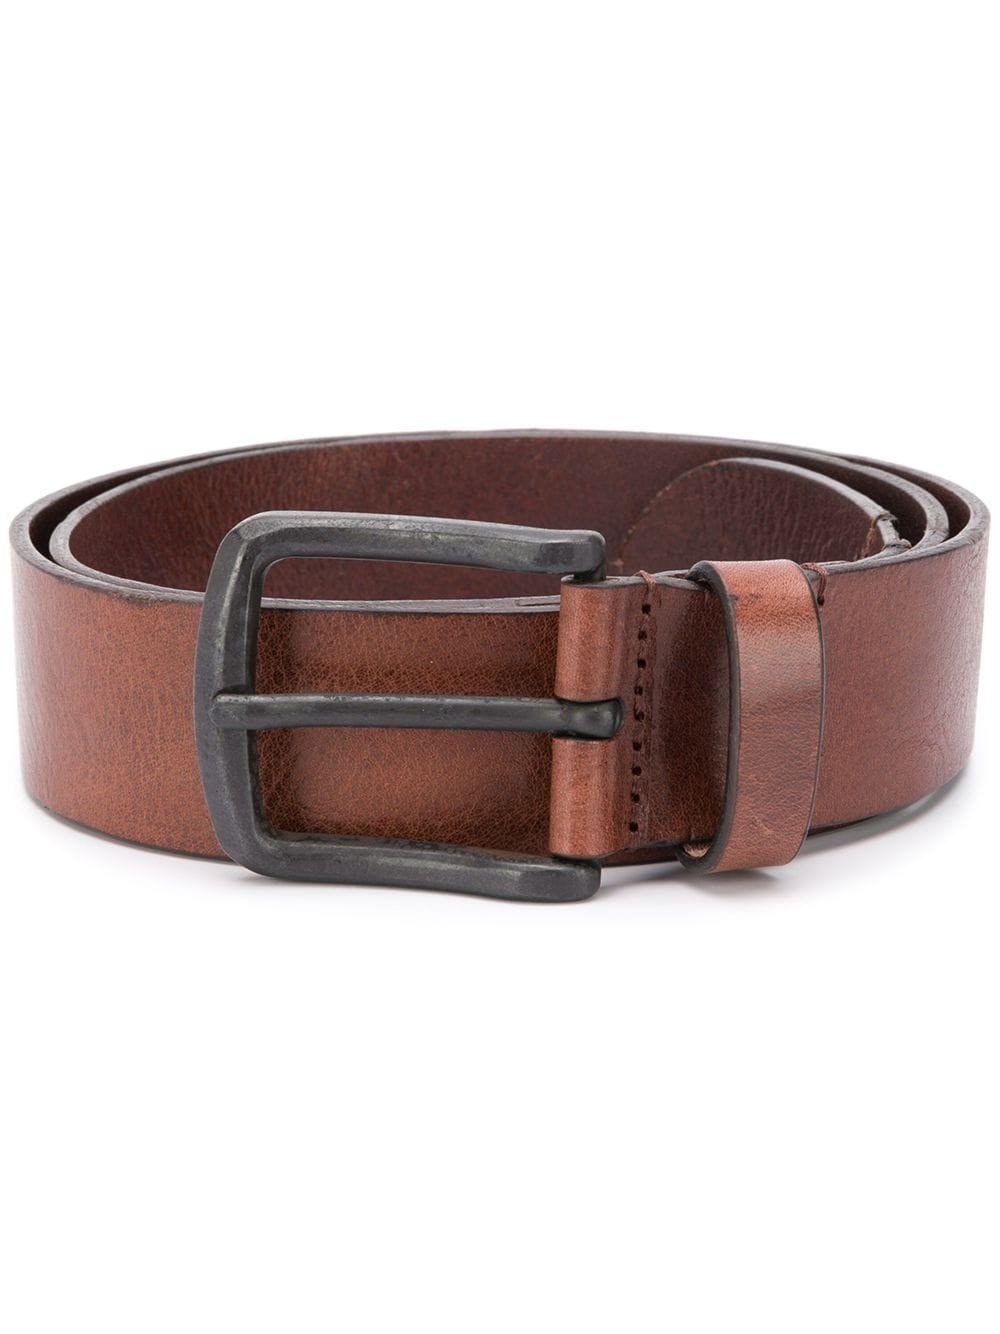 treated leather belt - 1